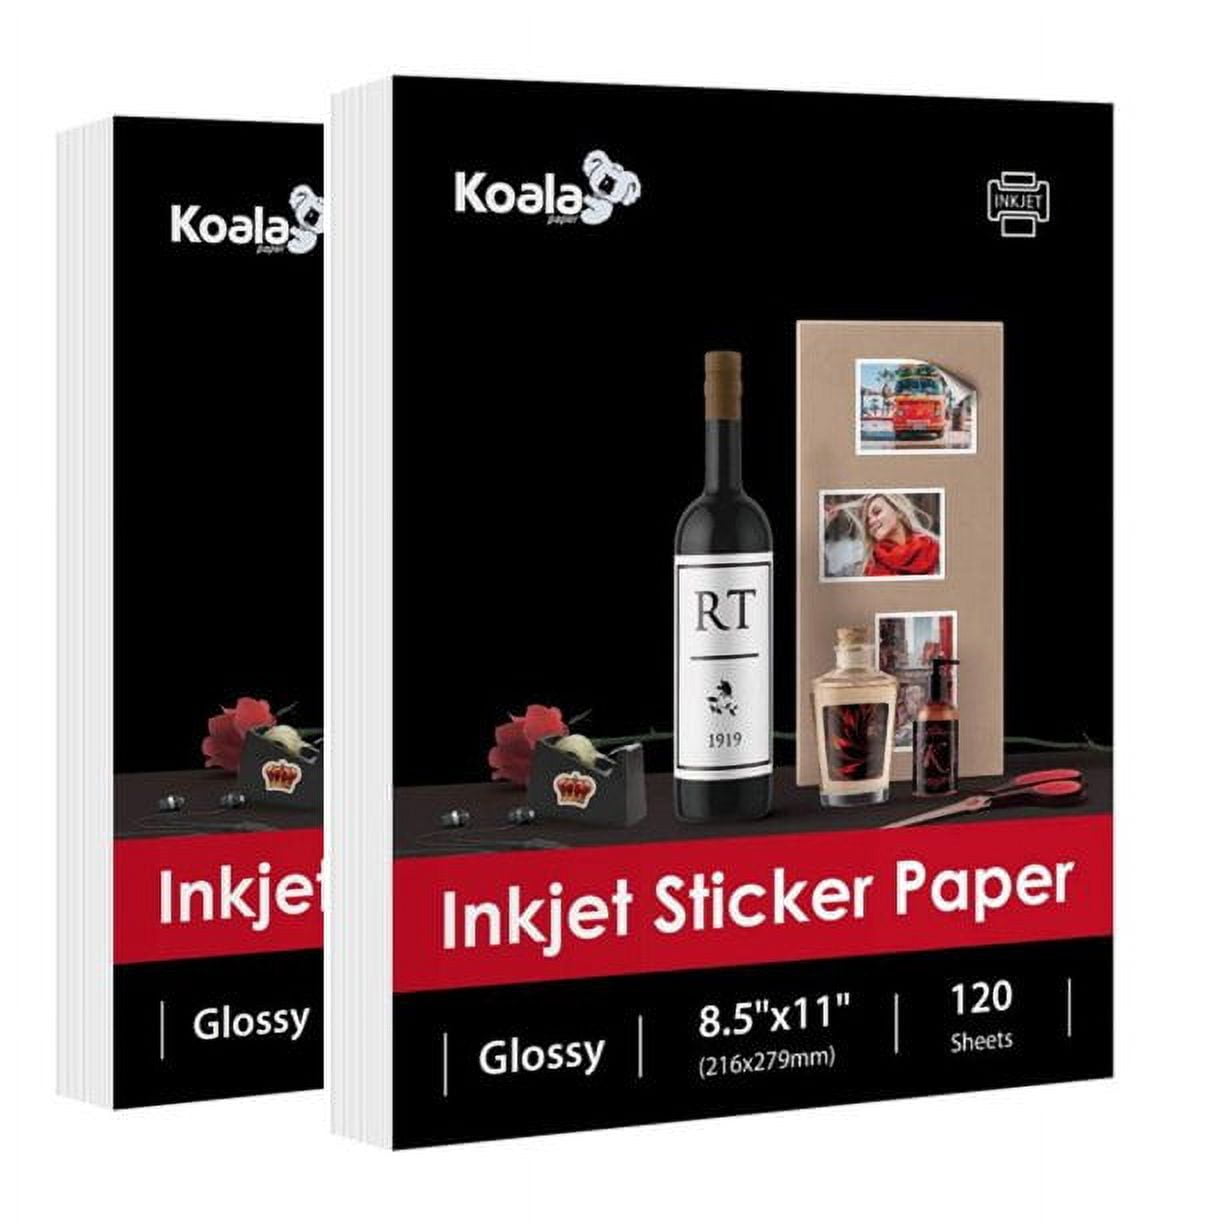 Bulk 240 Sheets Koala Printable Glossy Sticker Label Decal Paper